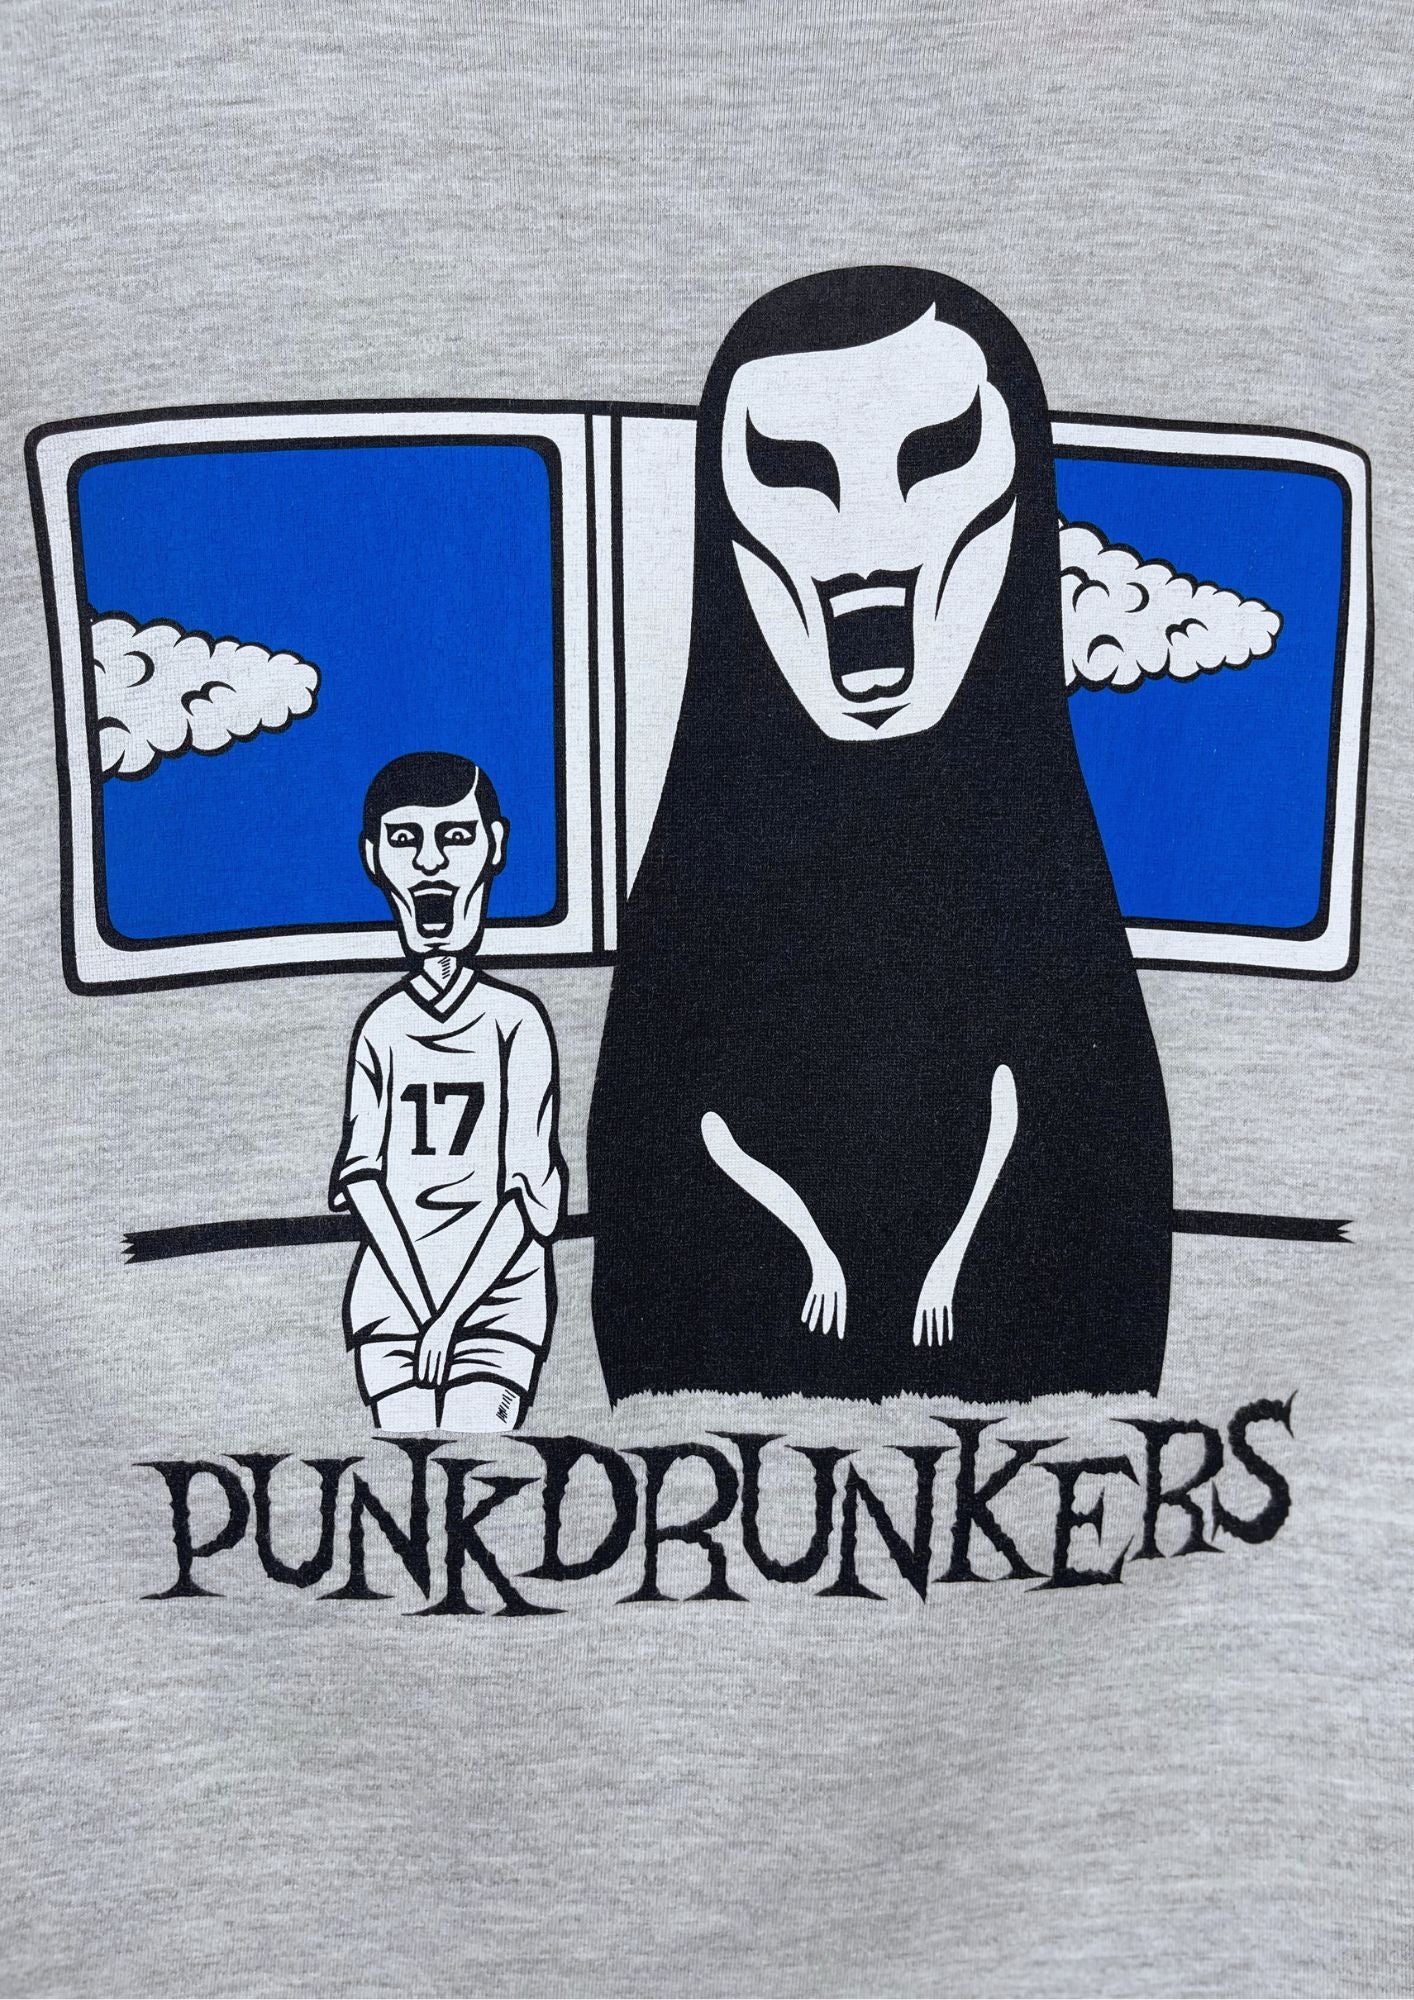 Spirited Away x Punk Drunkers 17th Anniversary T-shirt